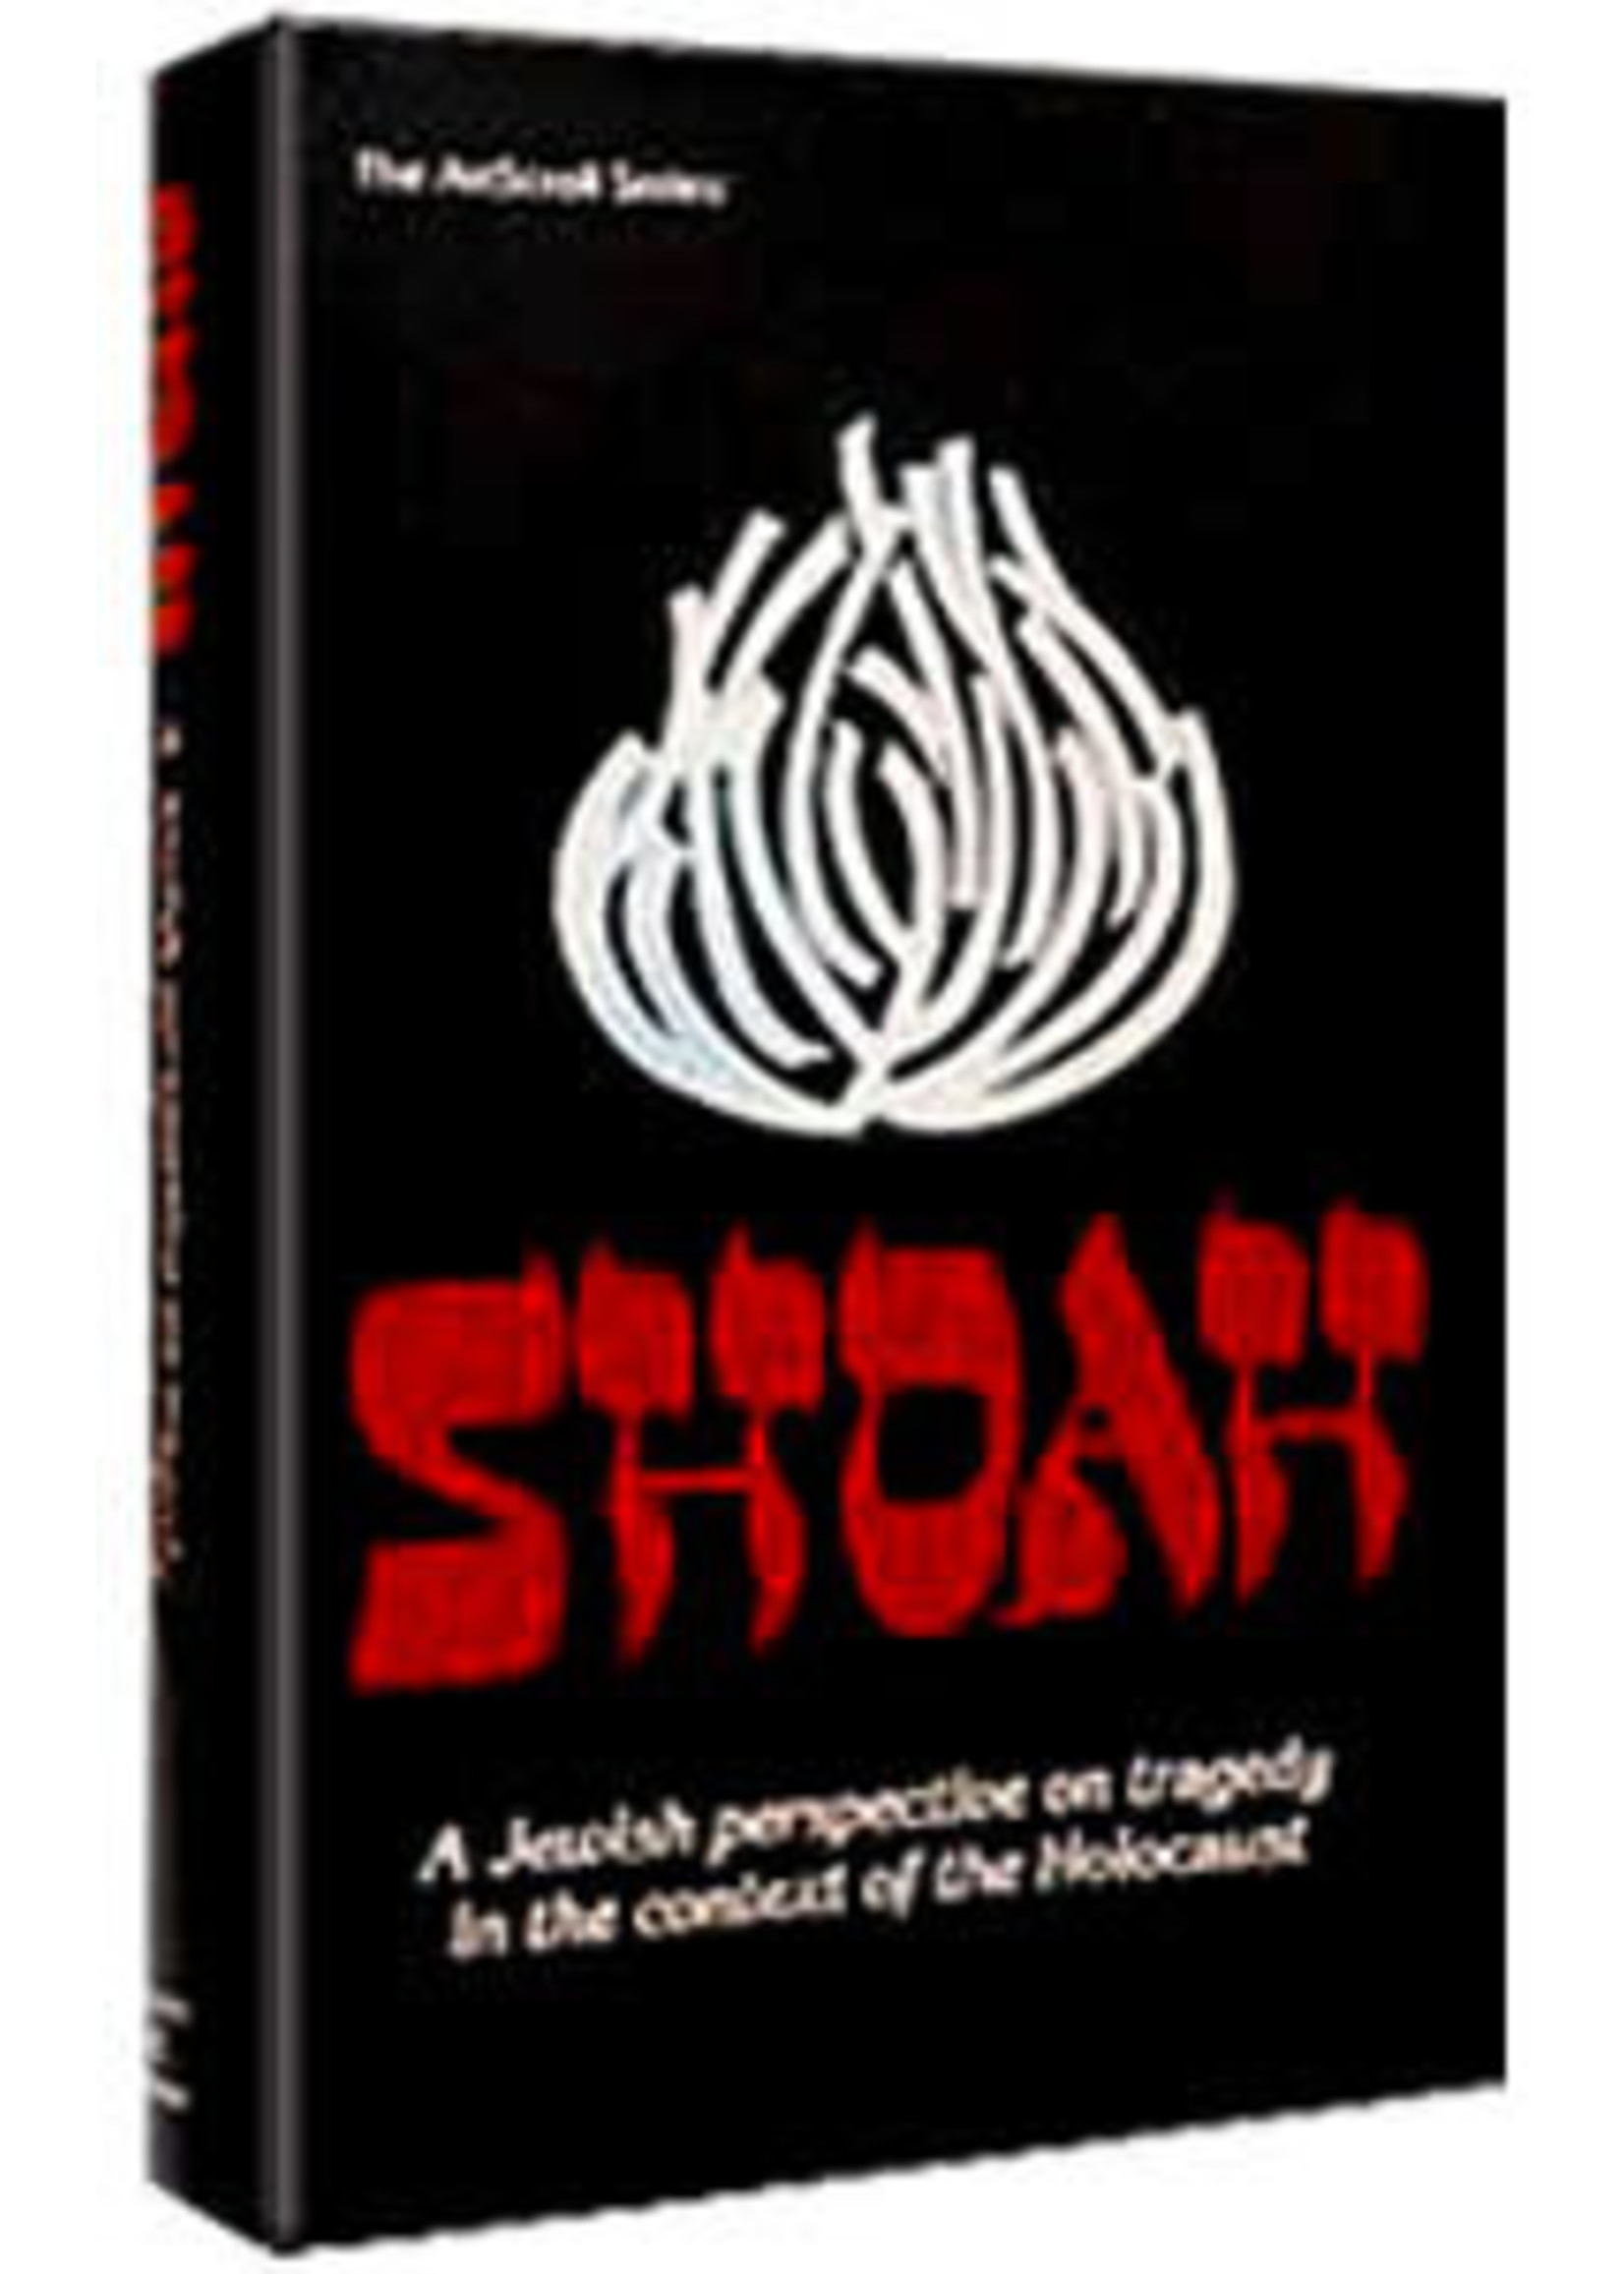 SHOAH H/C A JEWISH PERSPECTIVE